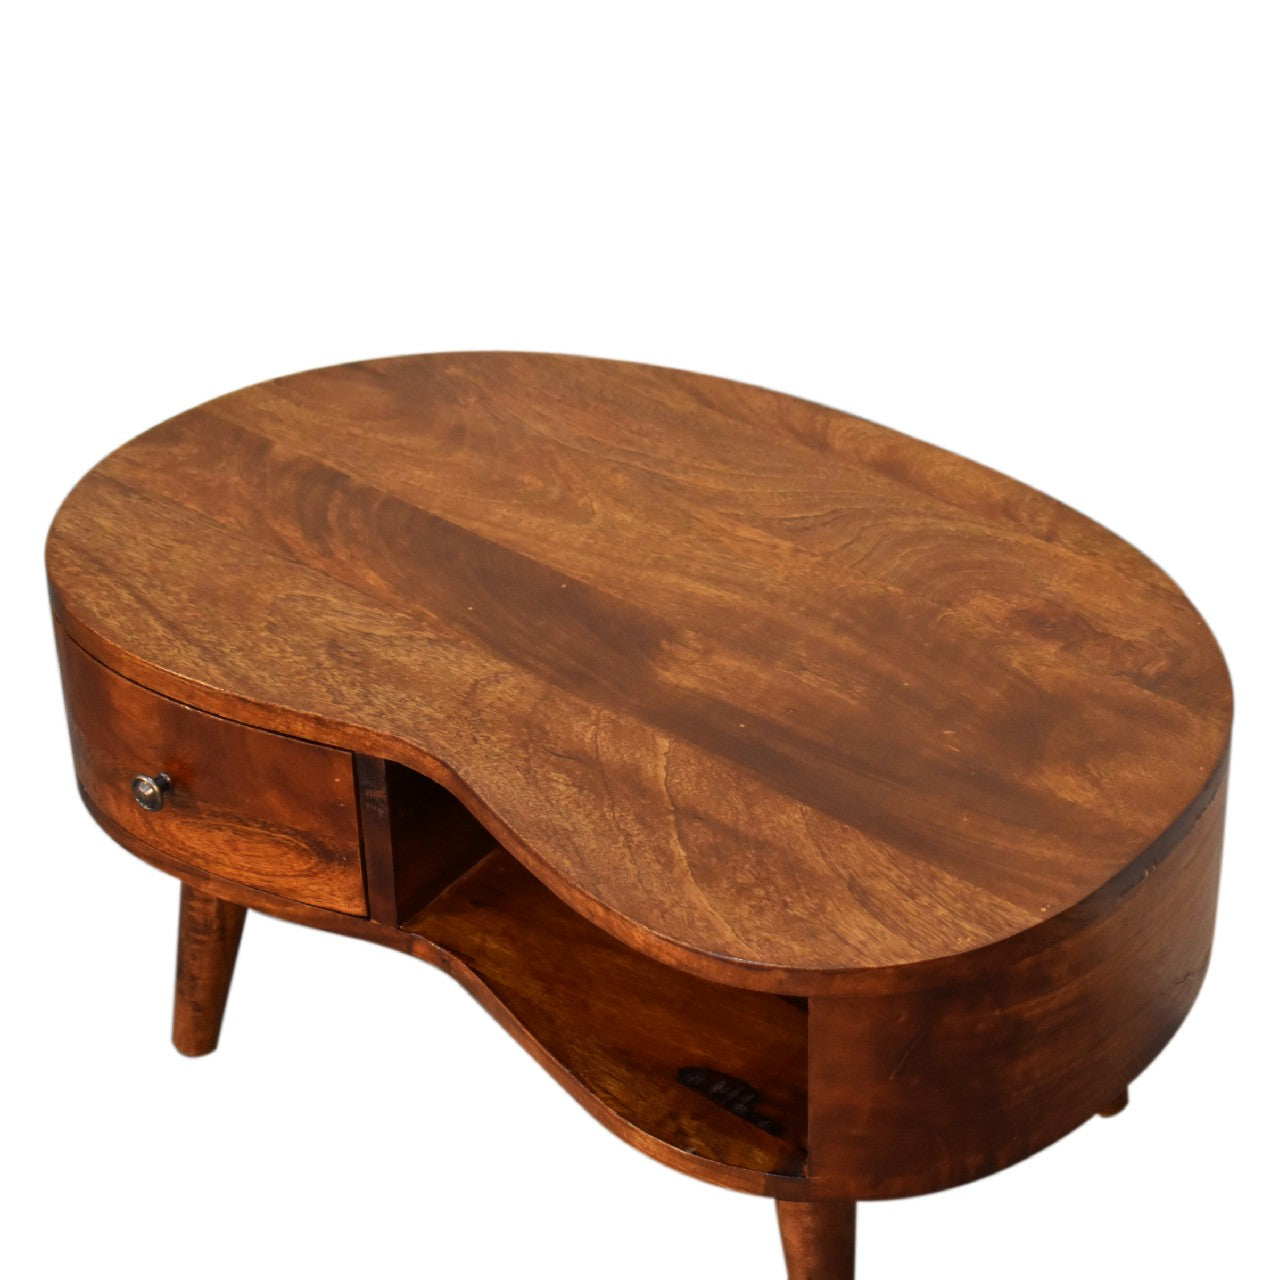 Mini Brooklyn solid wood coffee table in deep chestnut finish | malletandplane.com